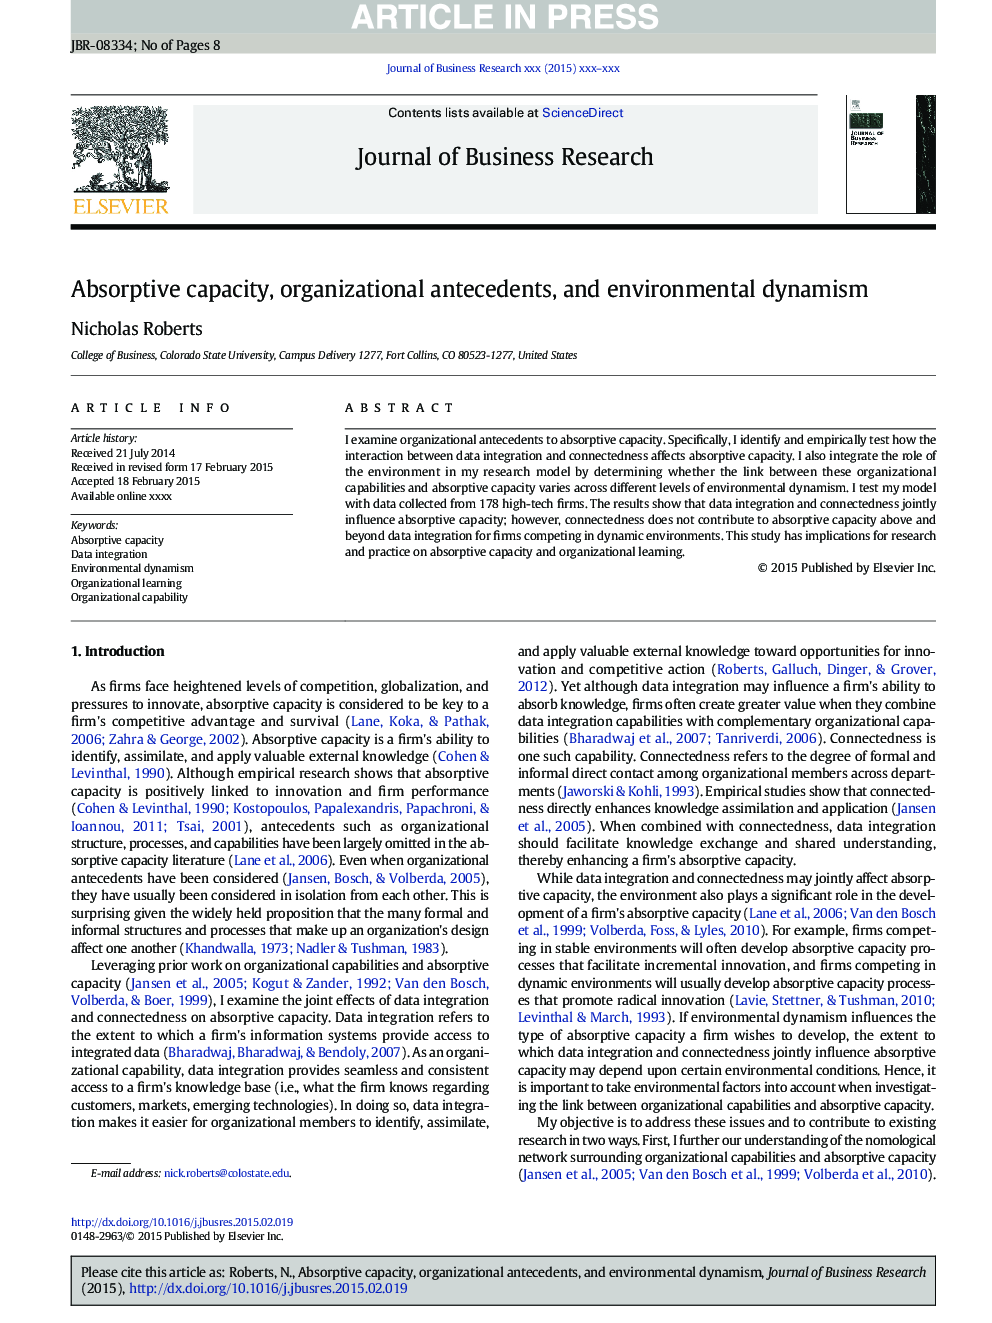 Absorptive capacity, organizational antecedents, and environmental dynamism